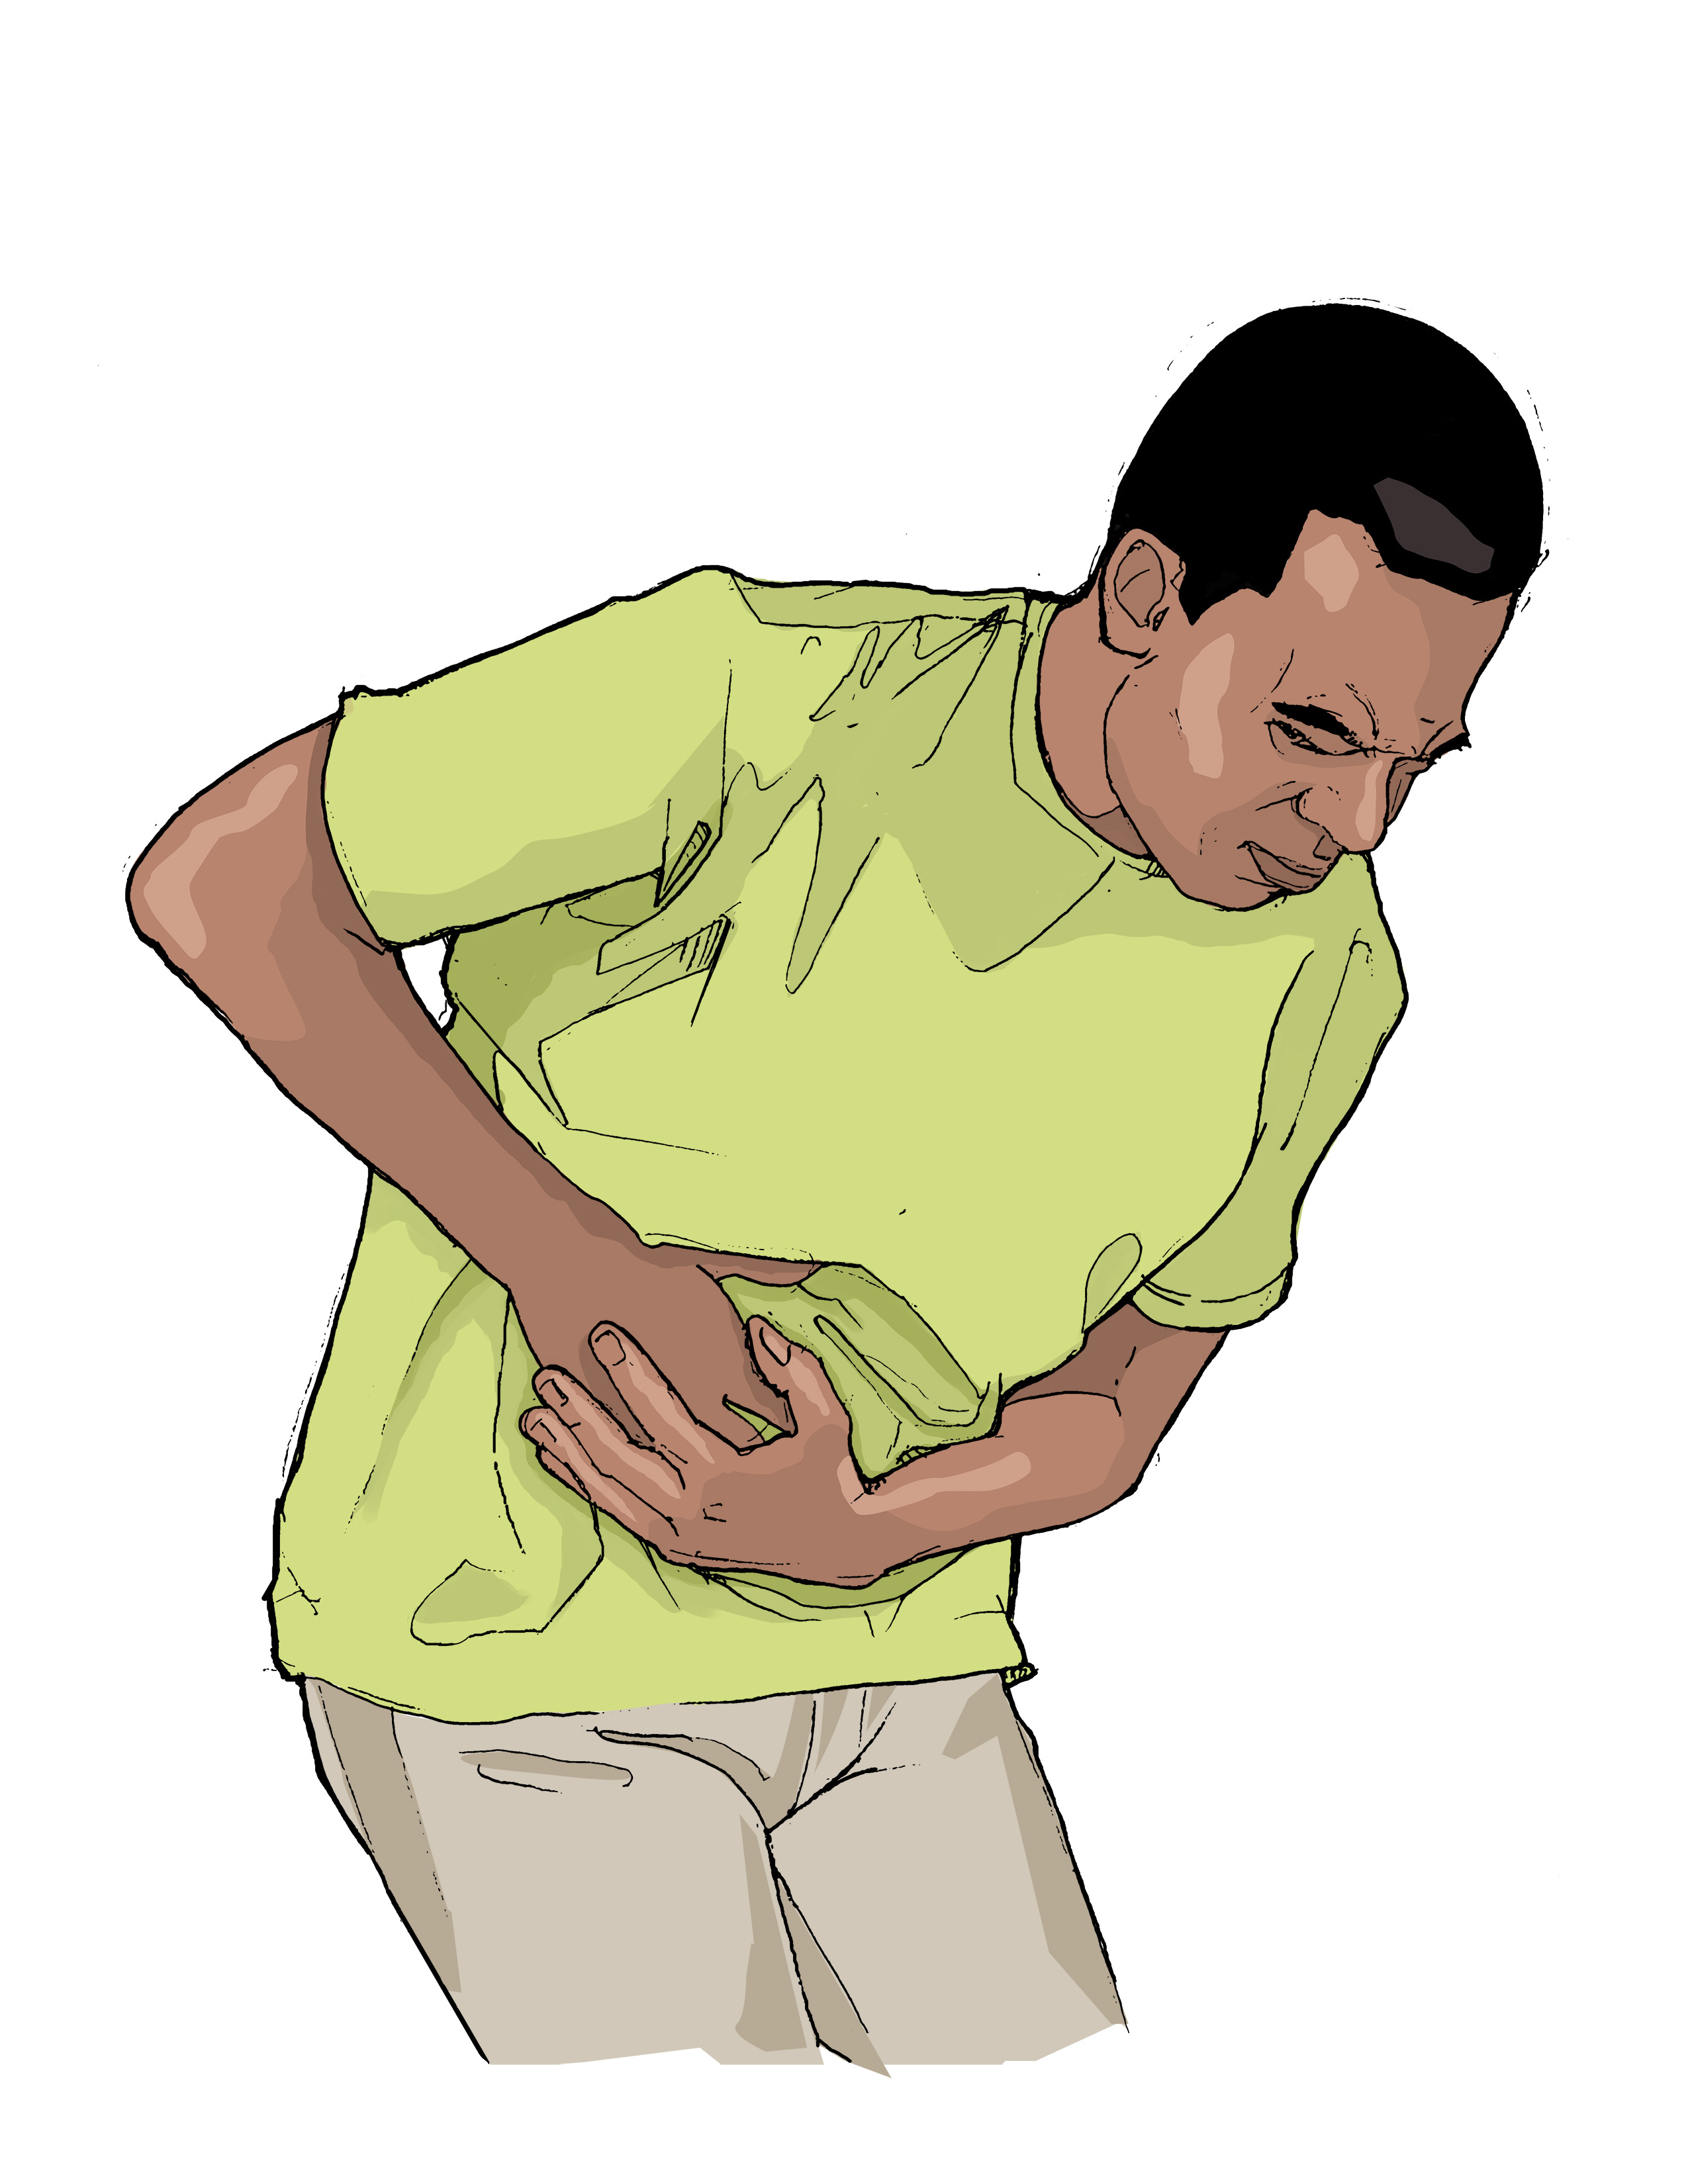 Pain due to gastritis